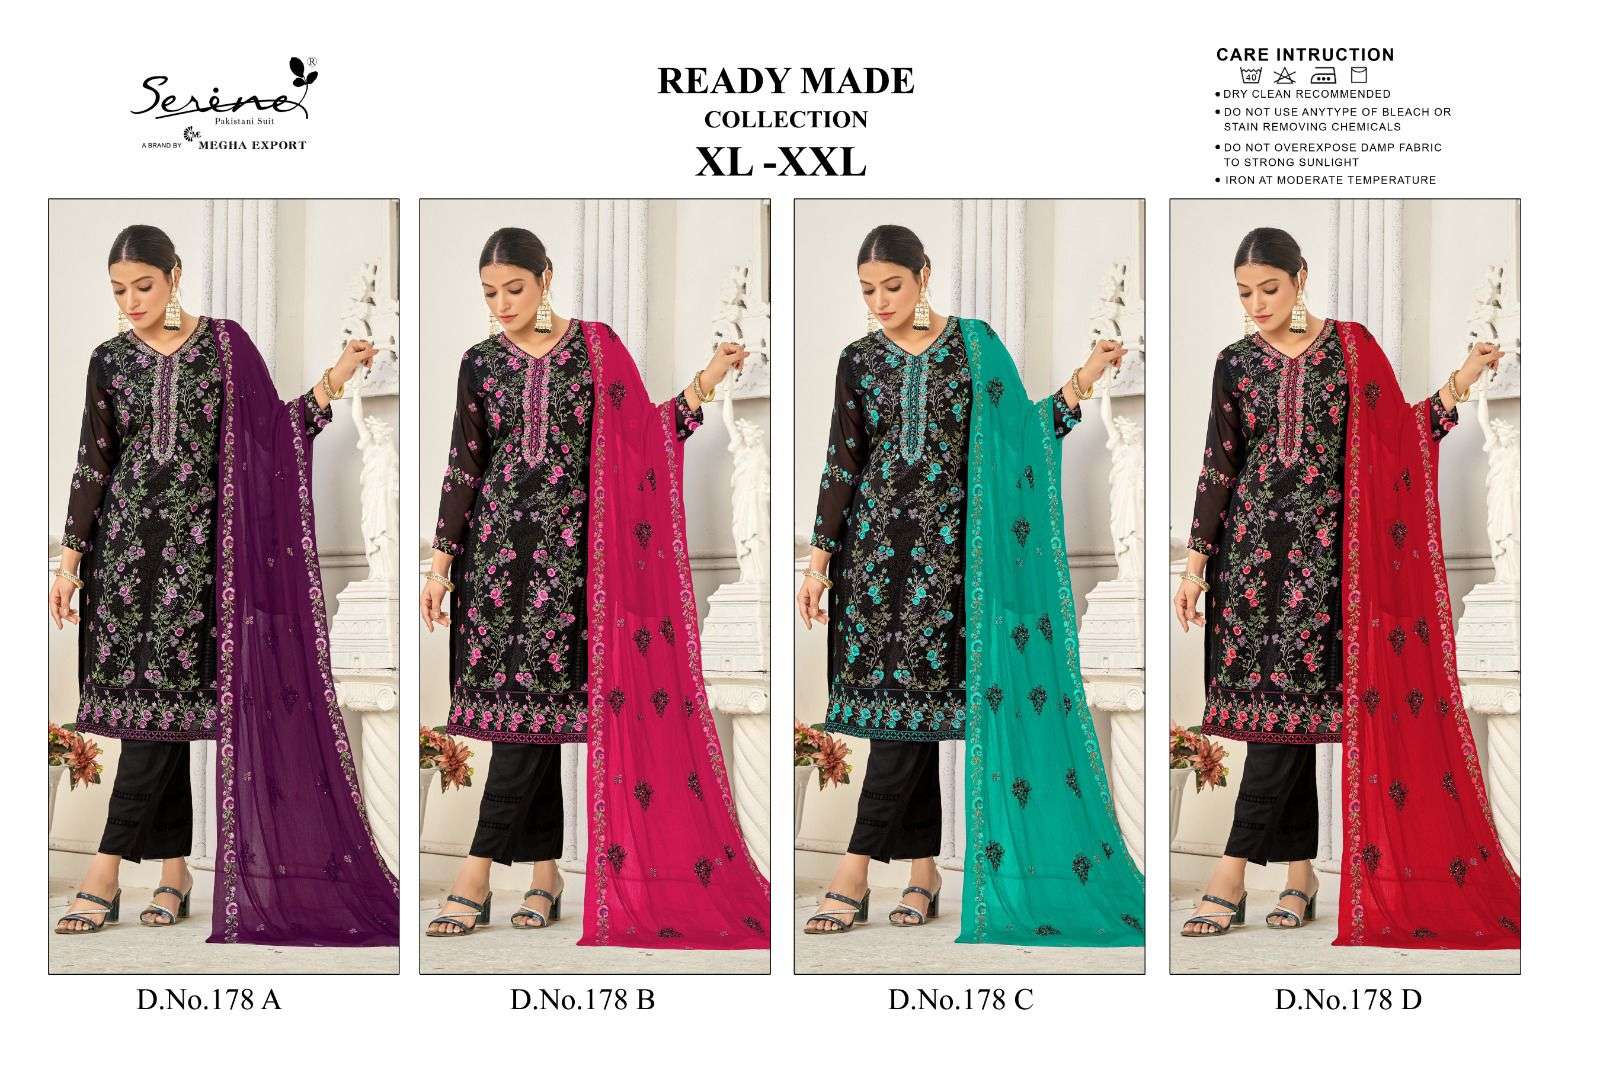 serine readymade collection 178 colour series designer readymade pakistani salwar kameez wholesaler